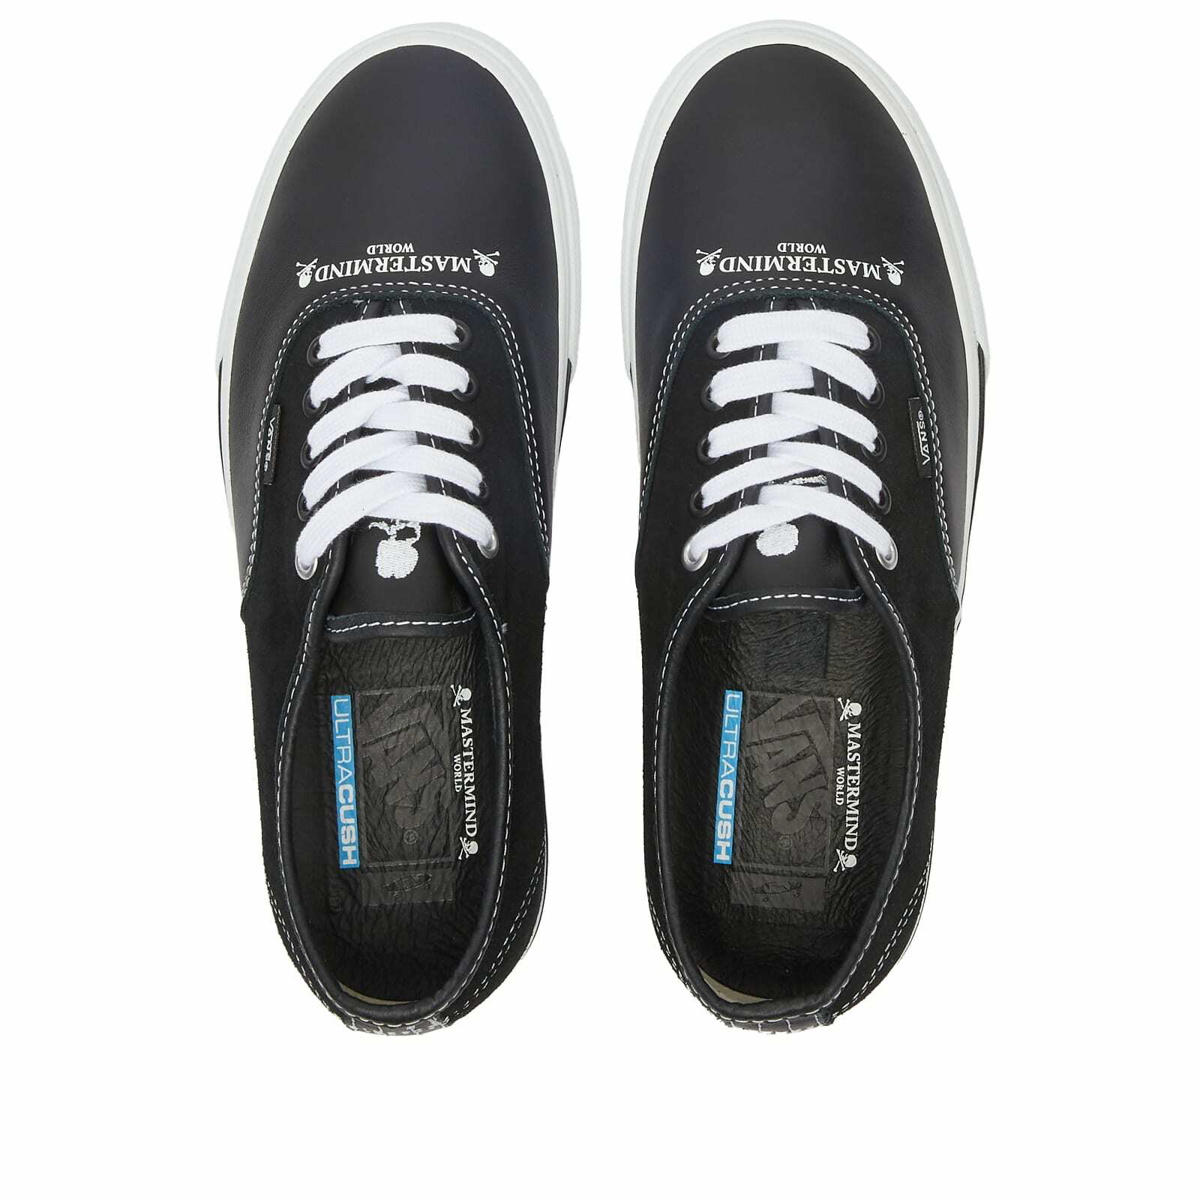 Vans Vault x Mastermind World UA Authentic LX Sneakers in Black Vans